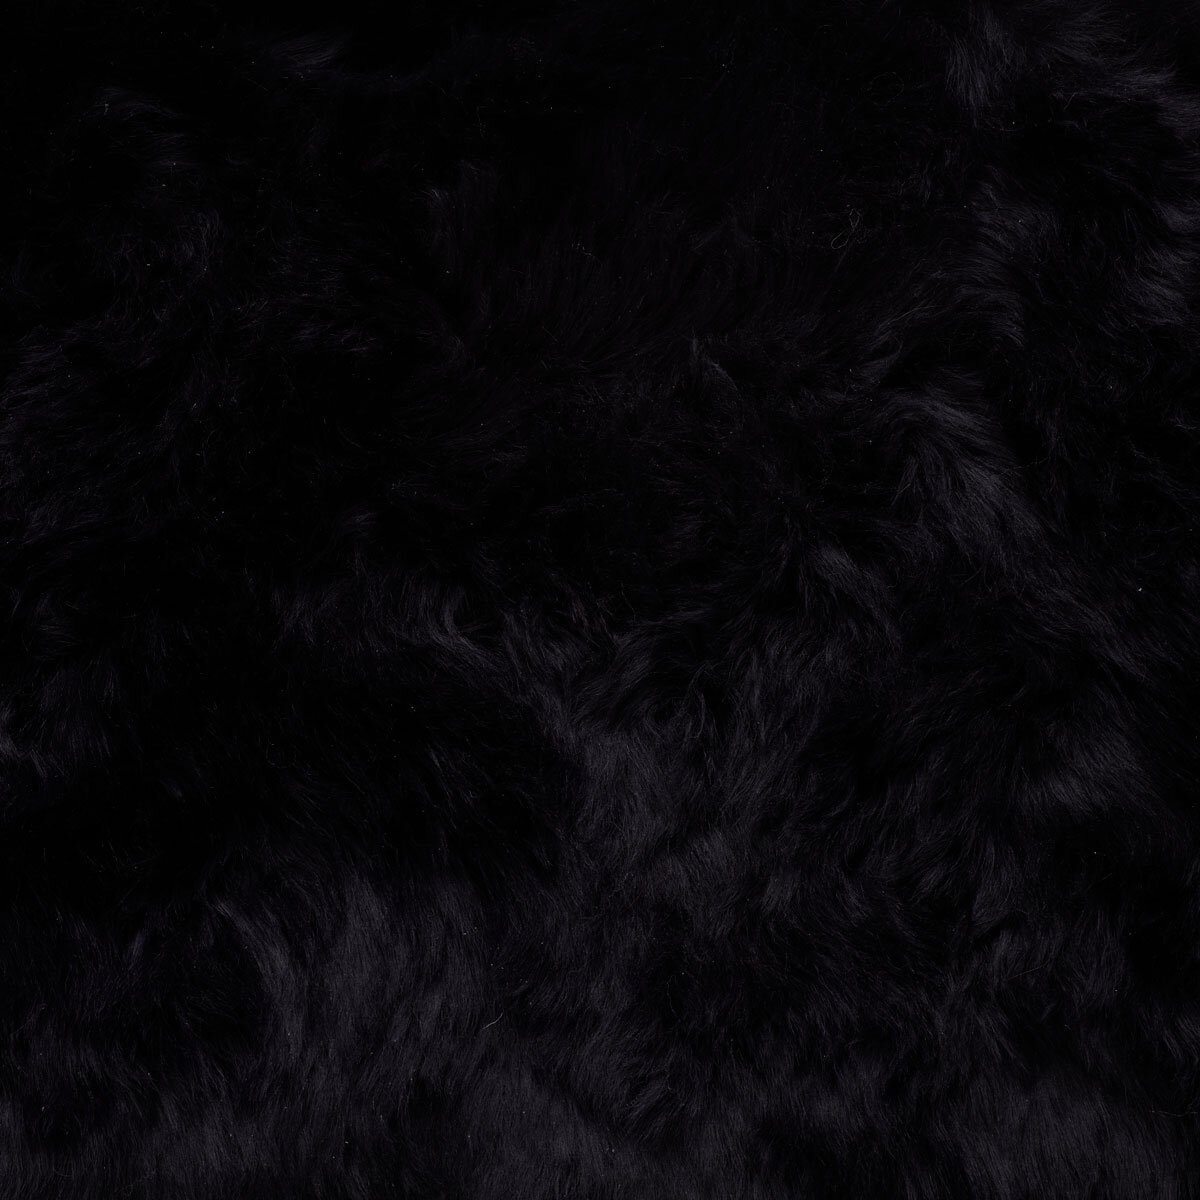 Bowron Long Wool Sheepskin Single Sided Cushion, 35 x 35cm in Black